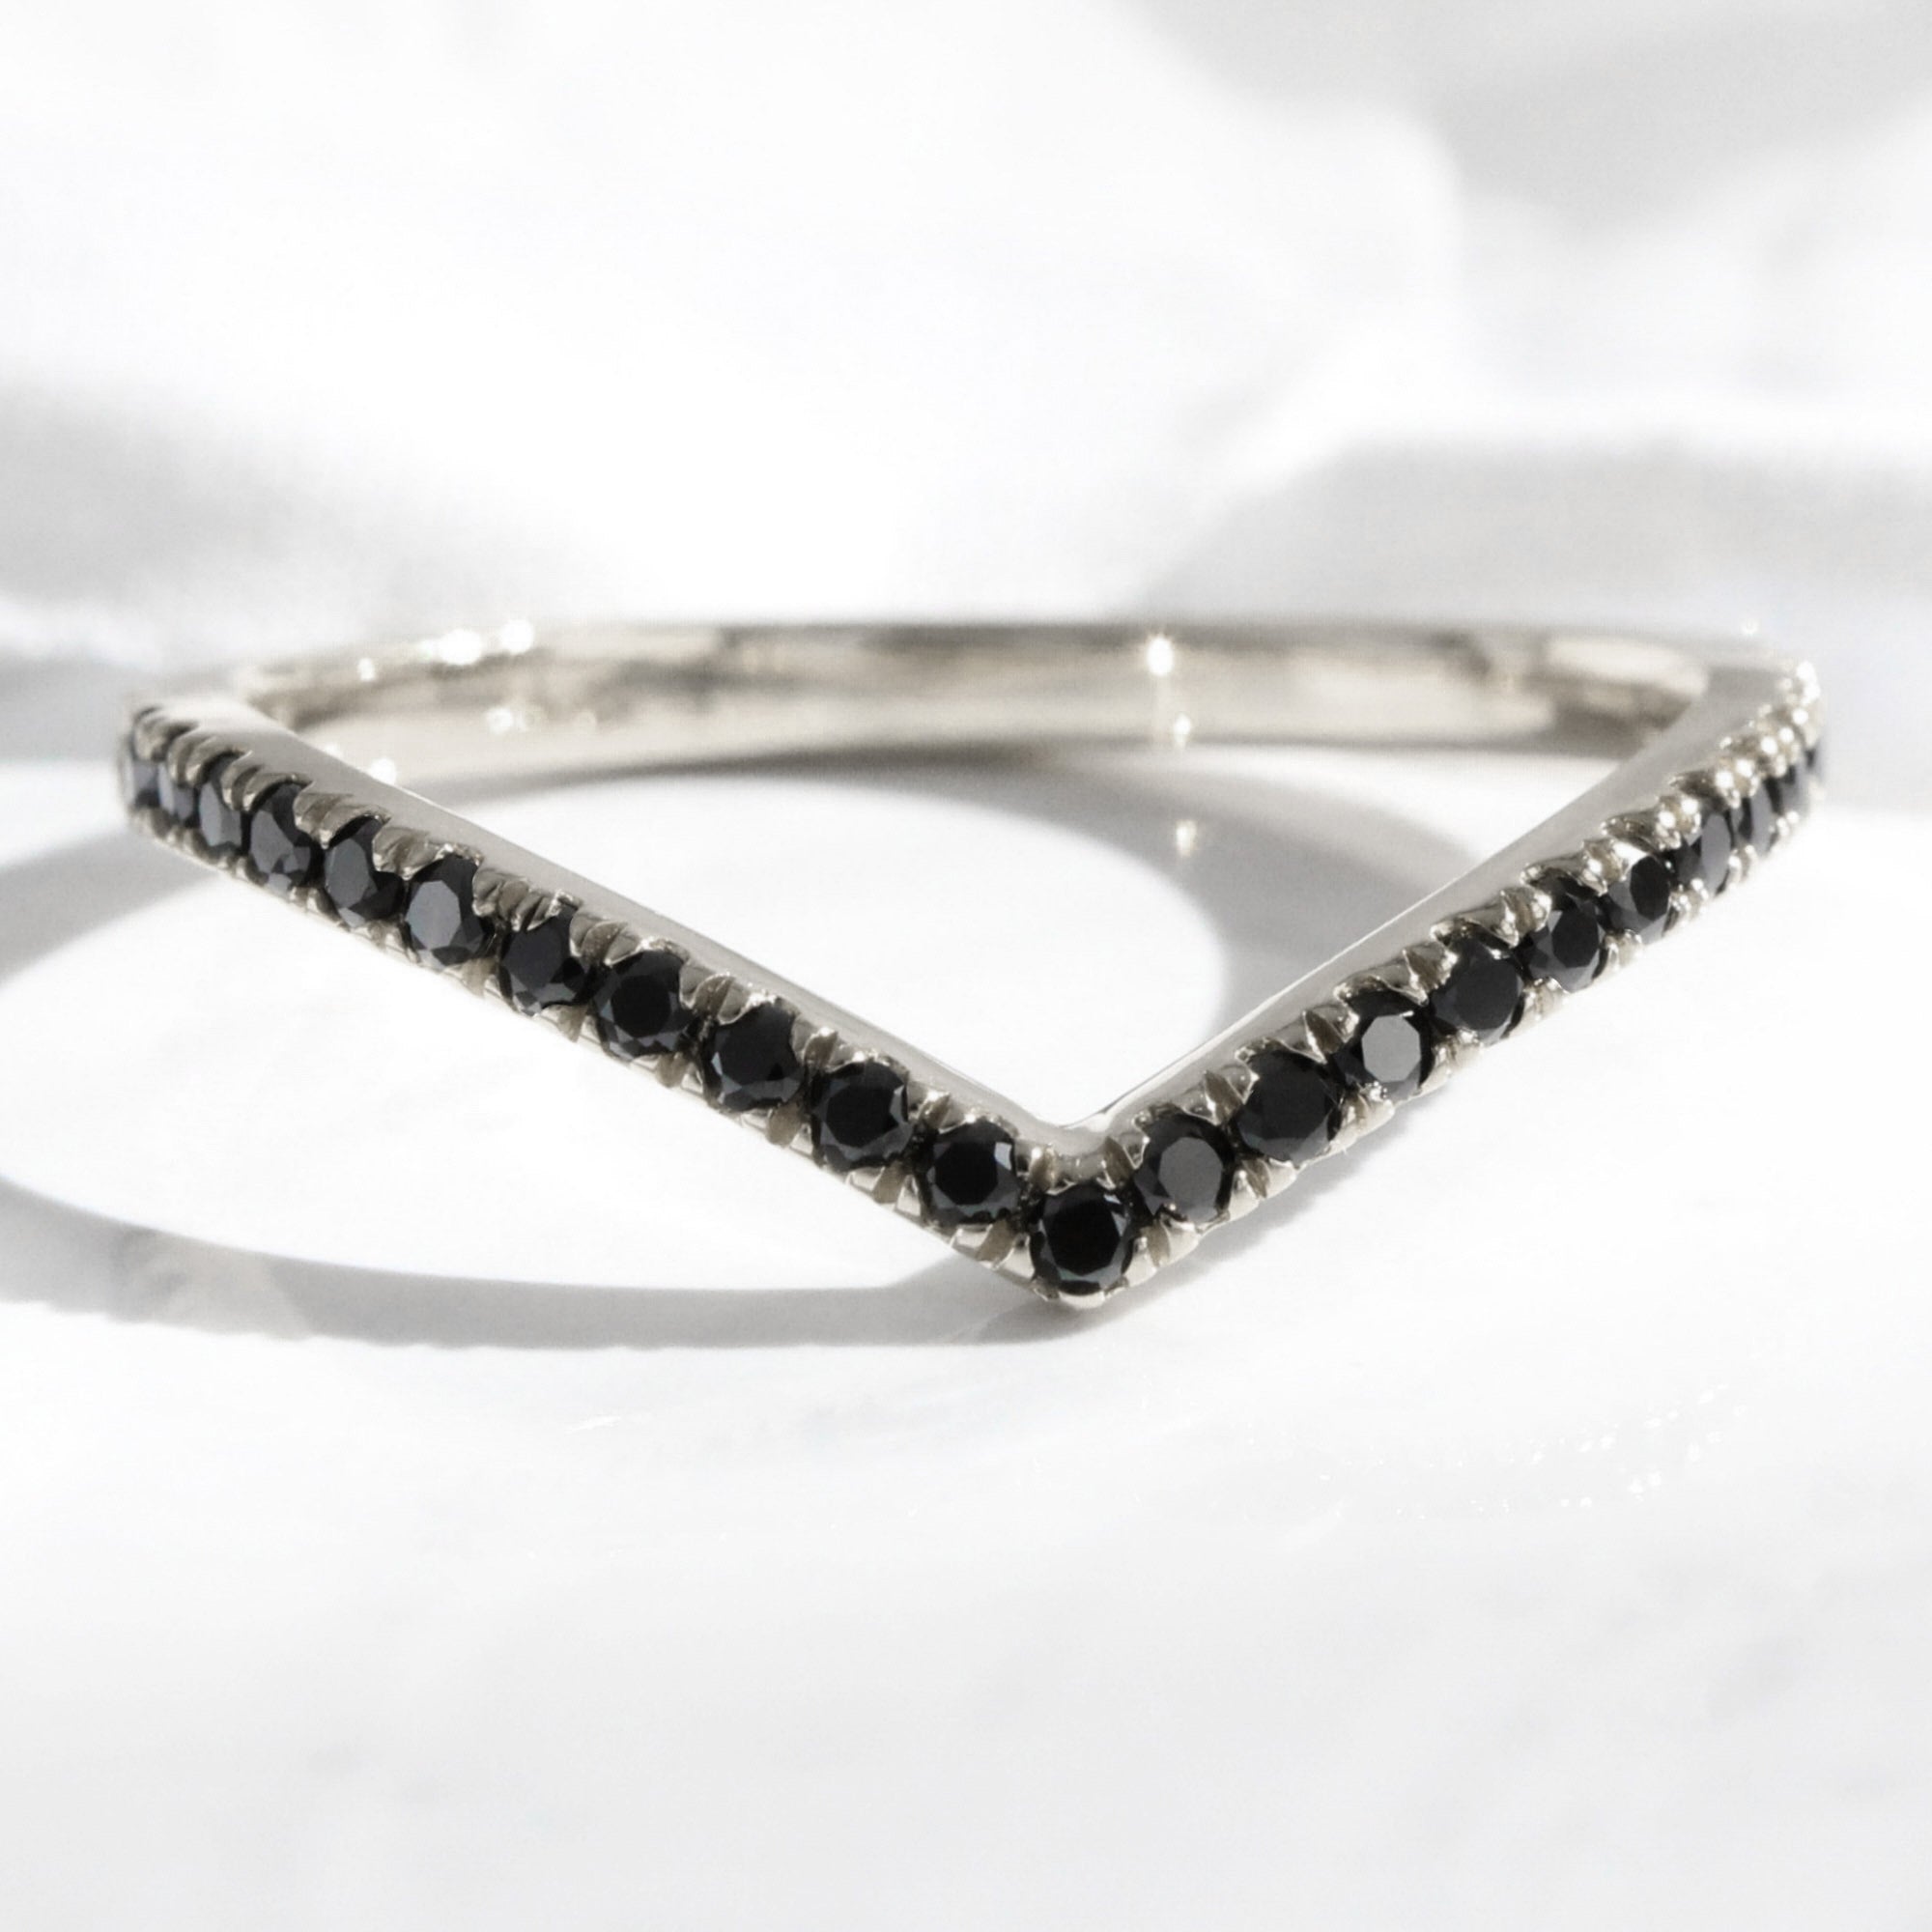 Chevron Black Diamond Wedding Ring white Gold V Shaped Curved Pave Band La More Design Jewelry